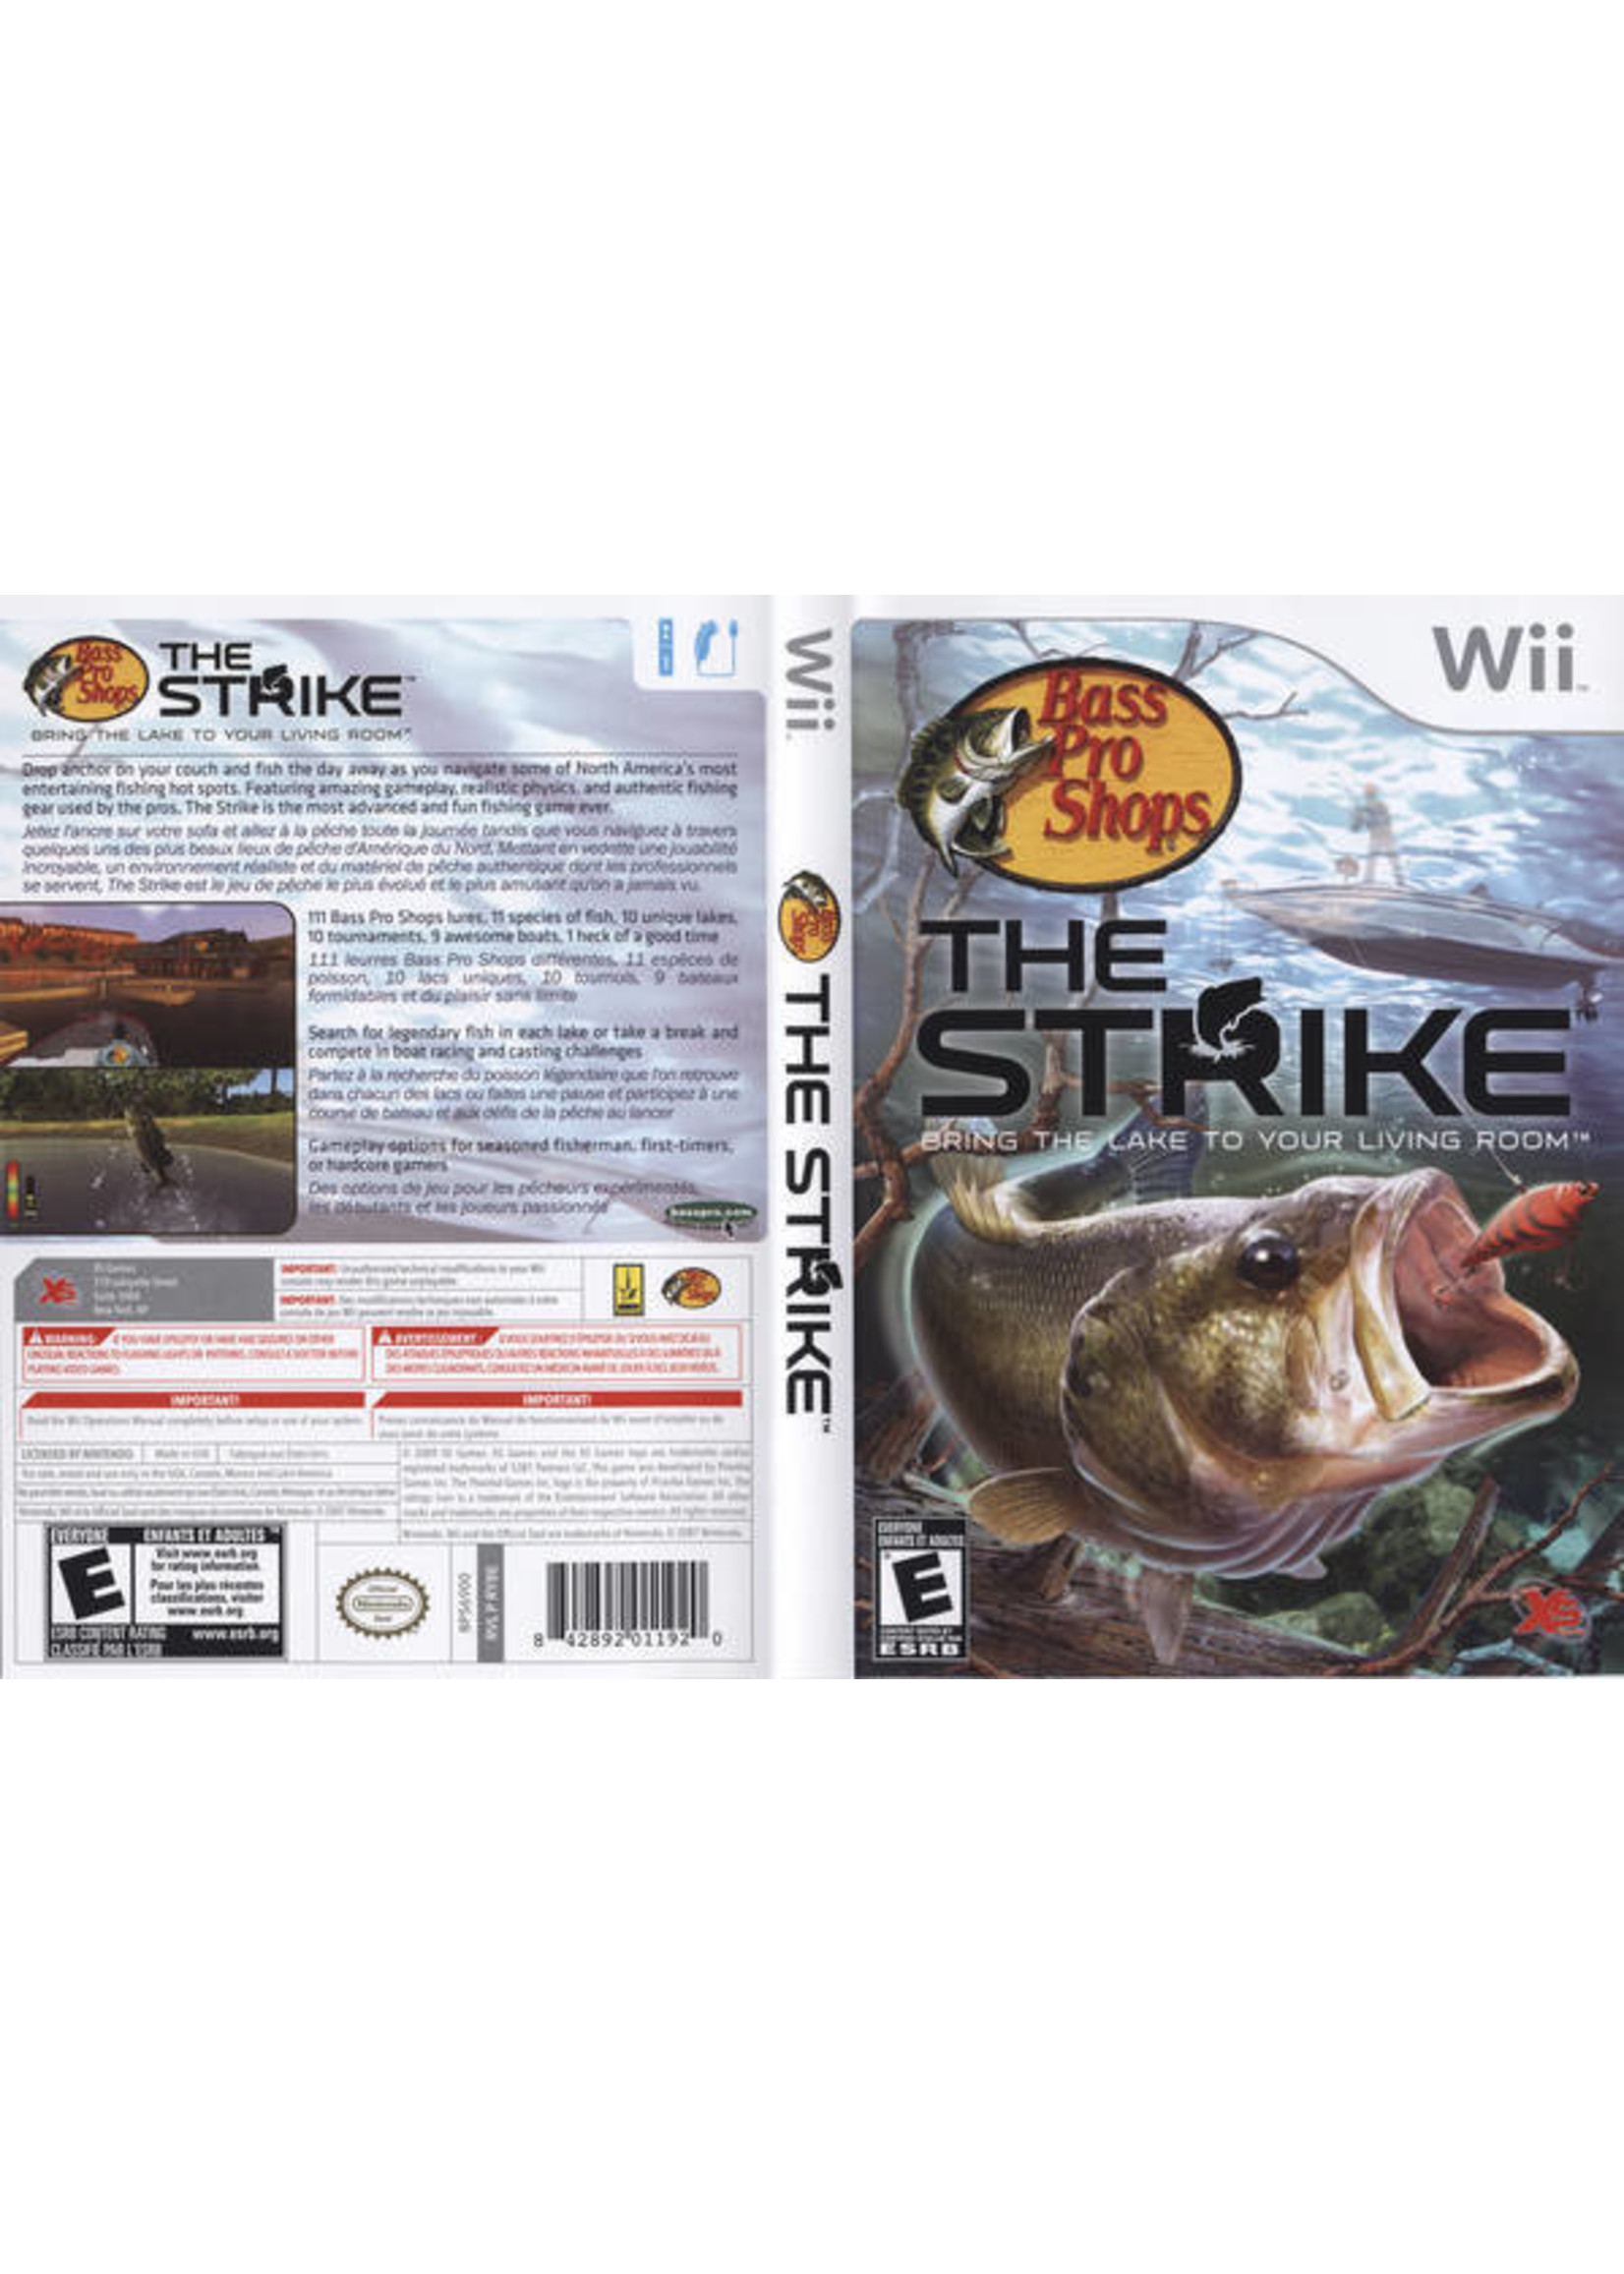 Nintendo Wii Bass Pro Shops The Strike